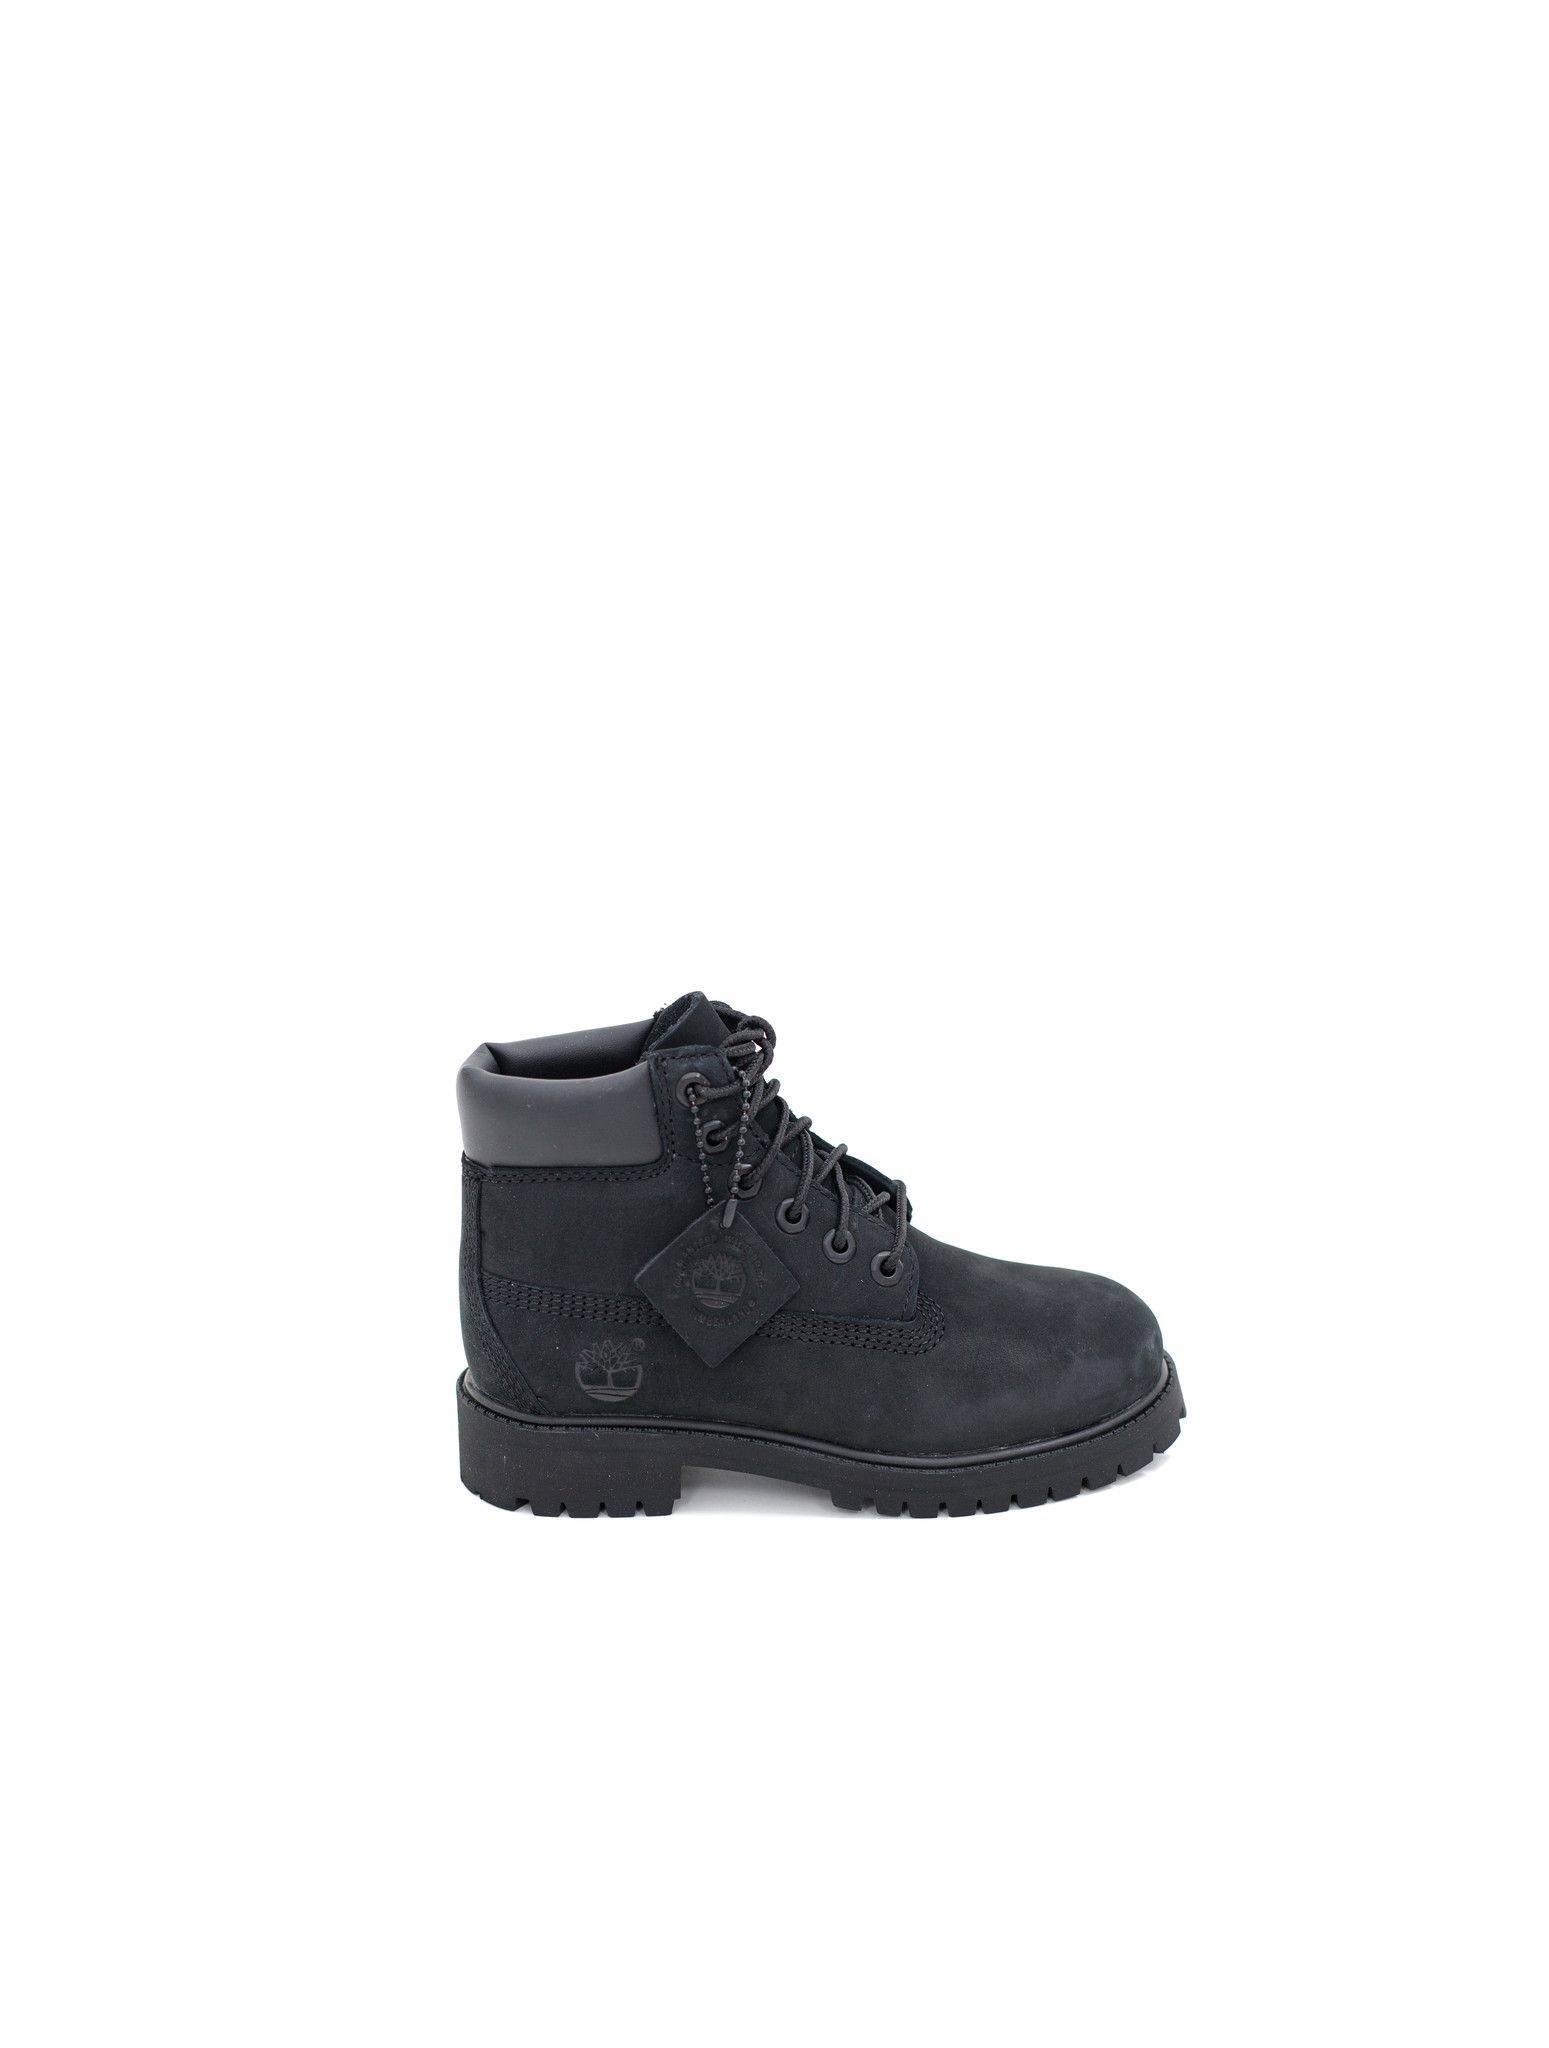 Youth Timberland 6" Premium Waterproof Boot 'Black Nubuck|TB012707001| Top Fashion